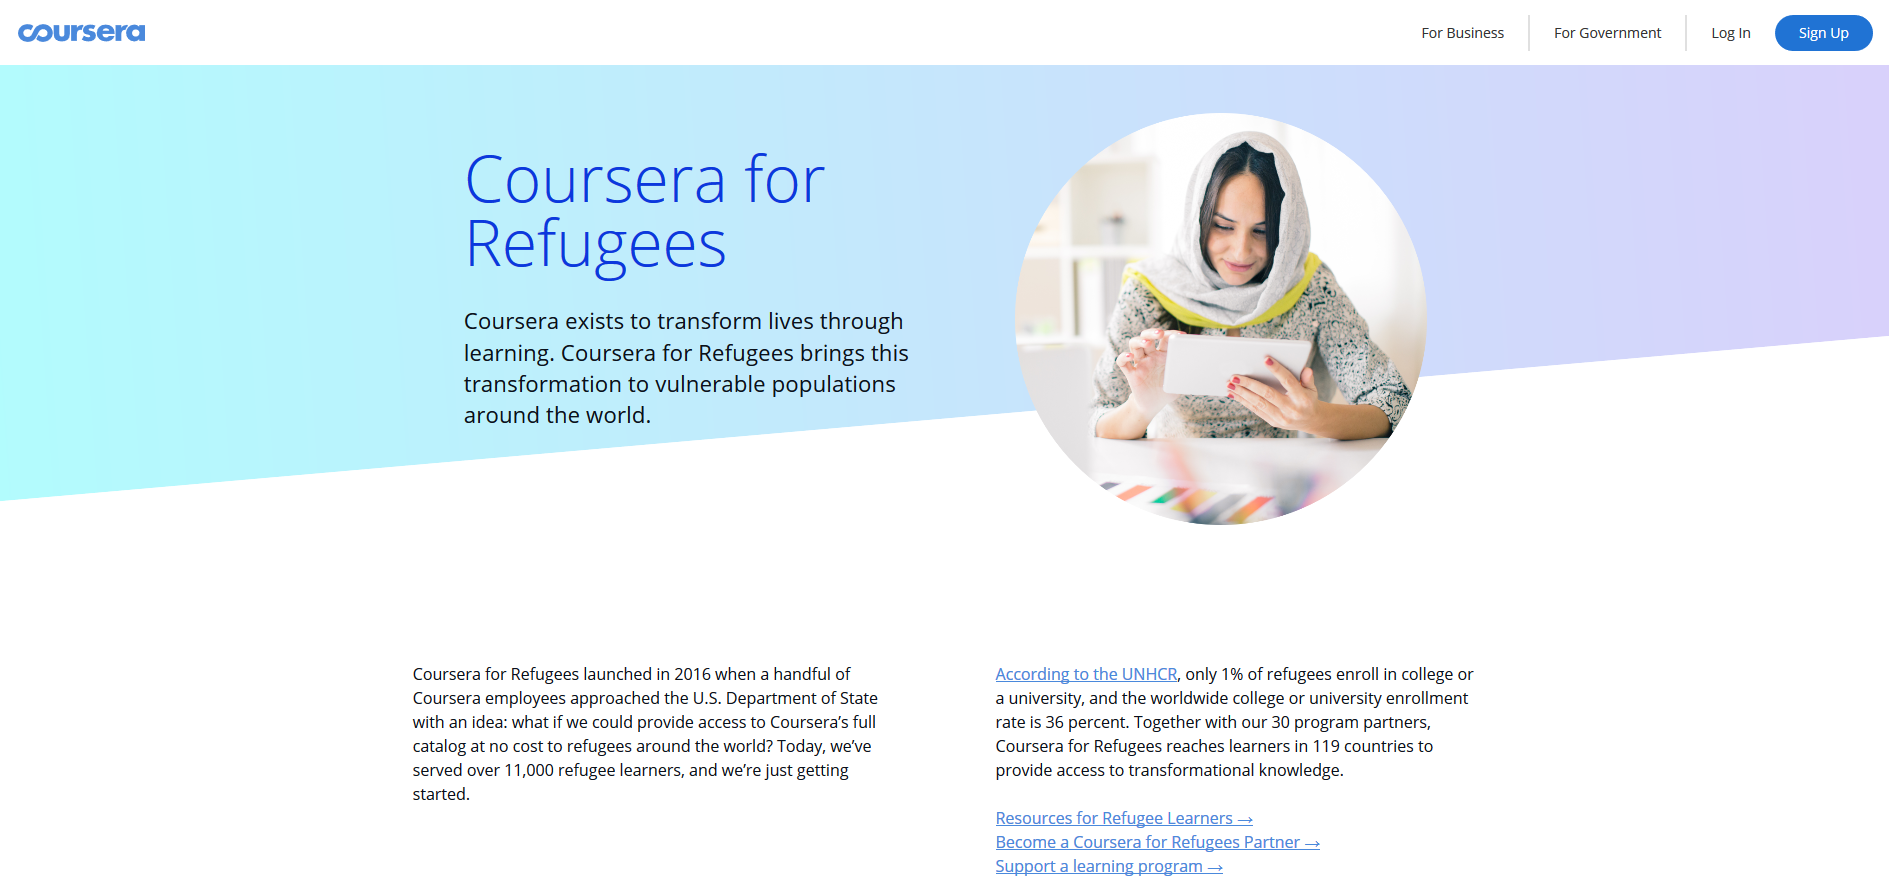 Coursera for Refugees